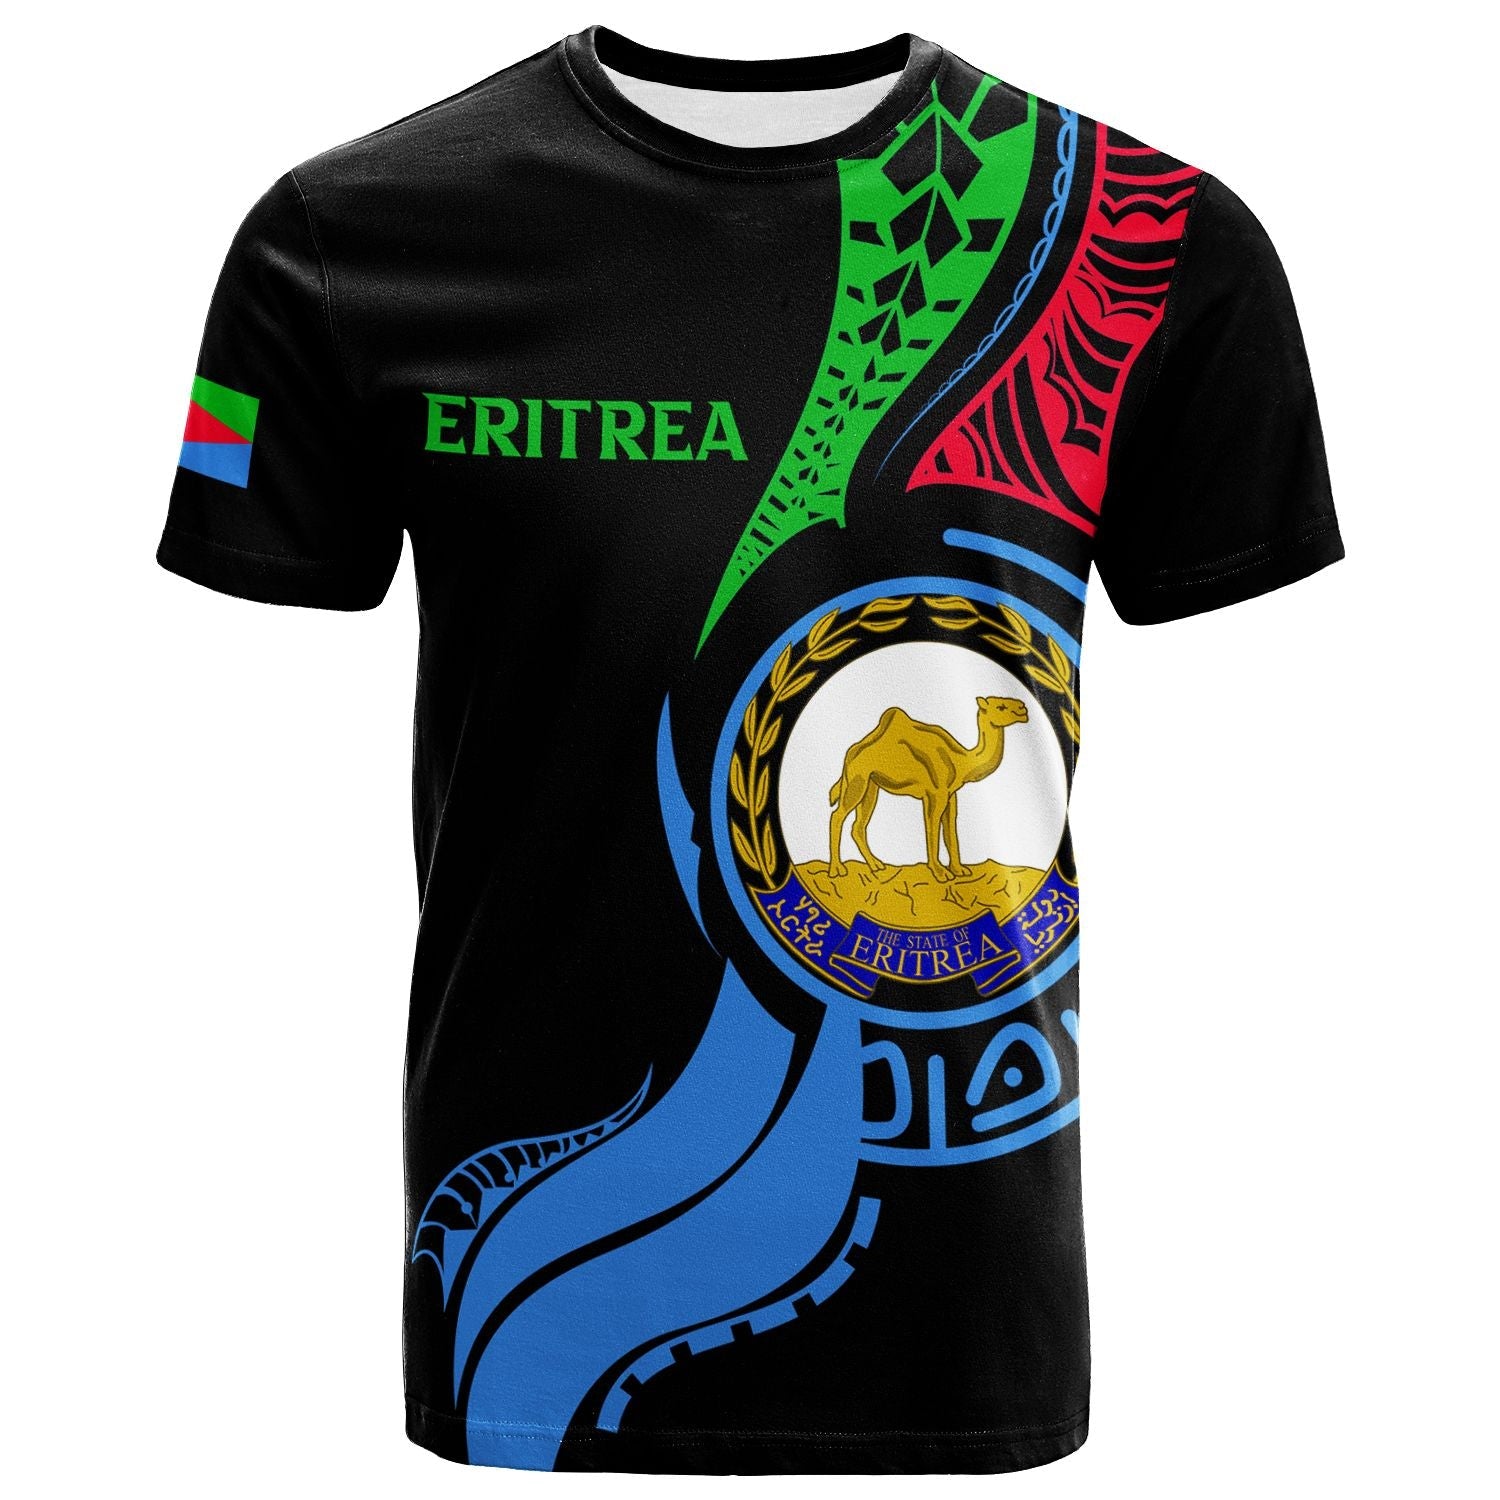 eritrea-t-shirt-pride-style